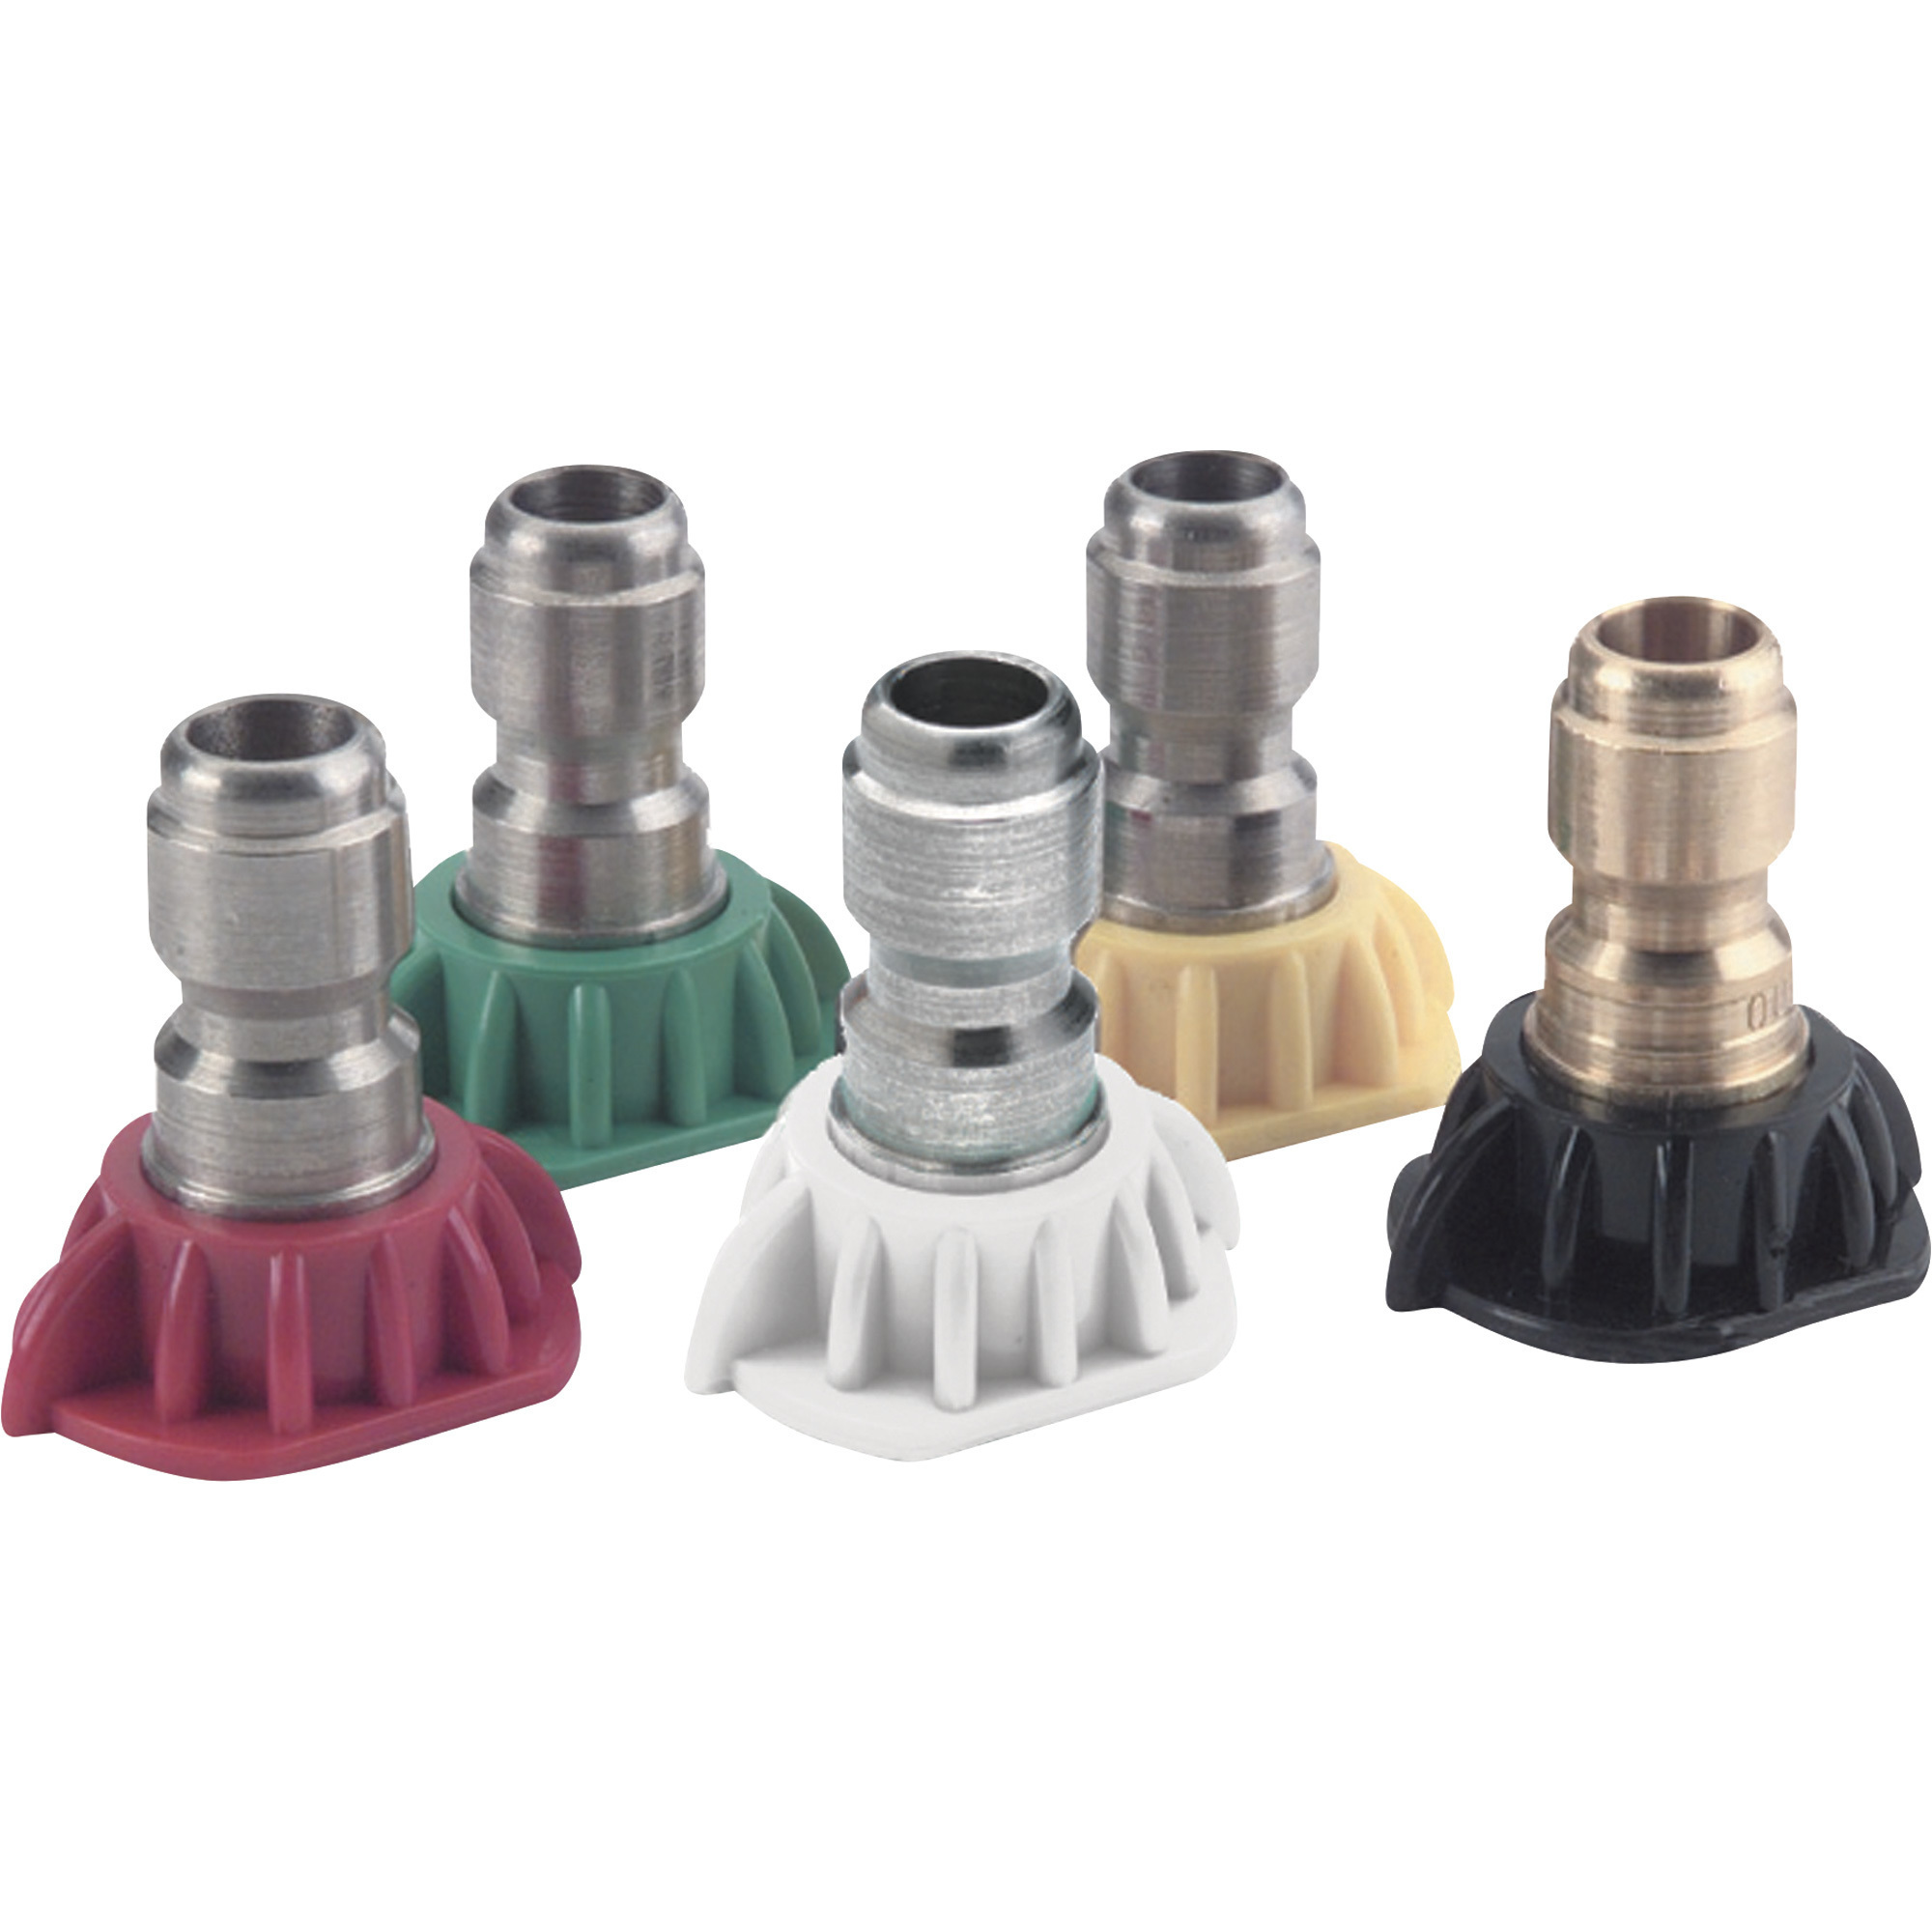 NorthStar 5-Pack Pressure Washer Nozzle Set â 5.0 Size, Model N105086P